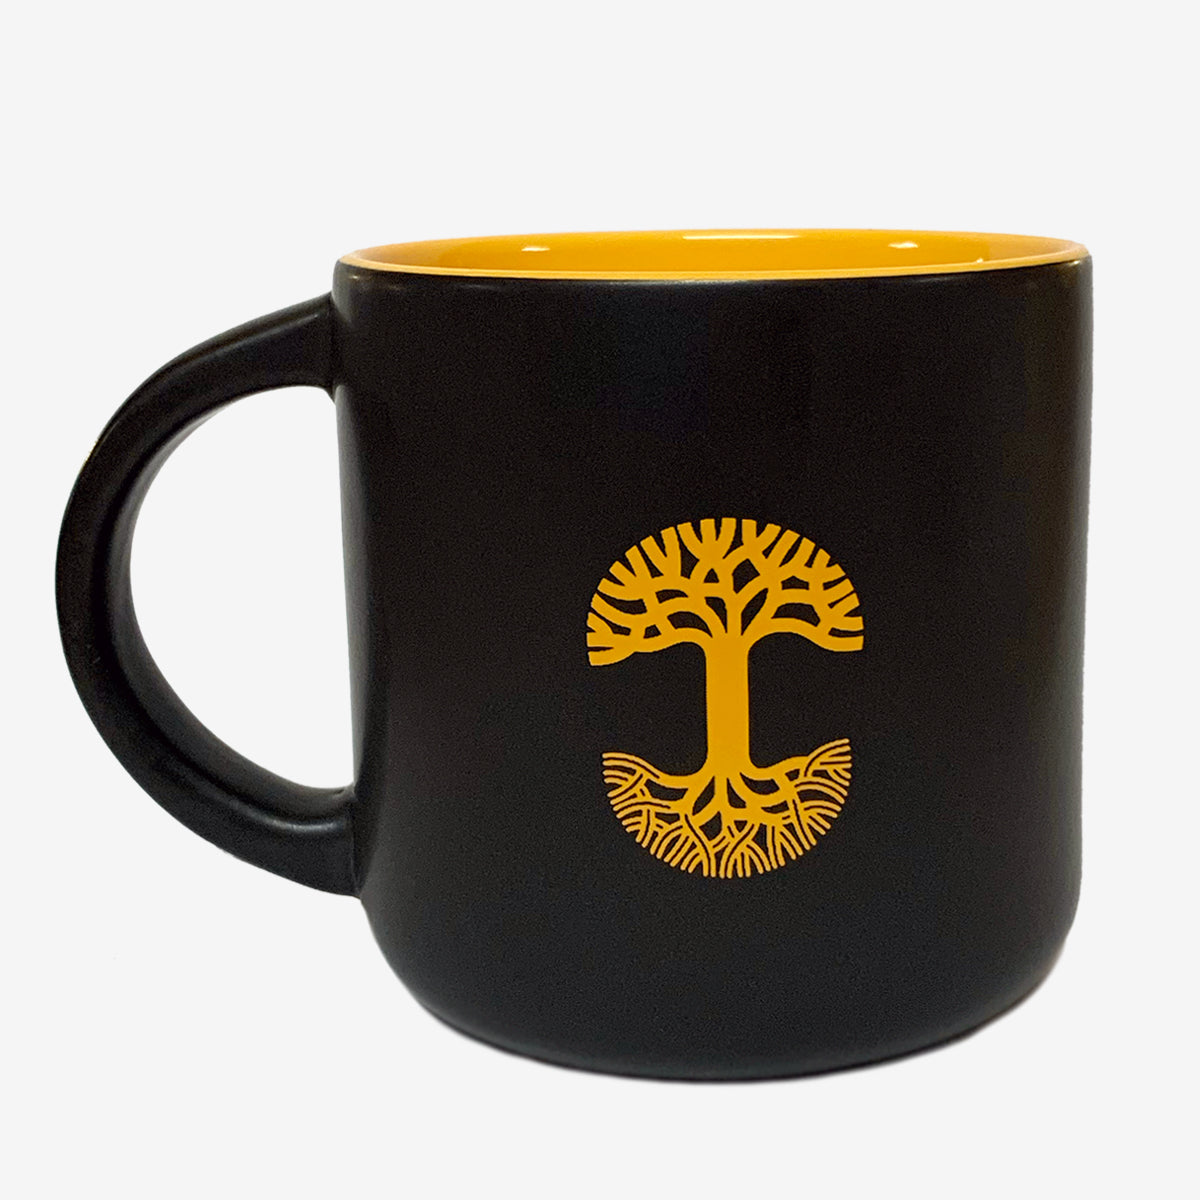 Black ceramic mug with yellow inside with yellow Oaklandish tree logo.